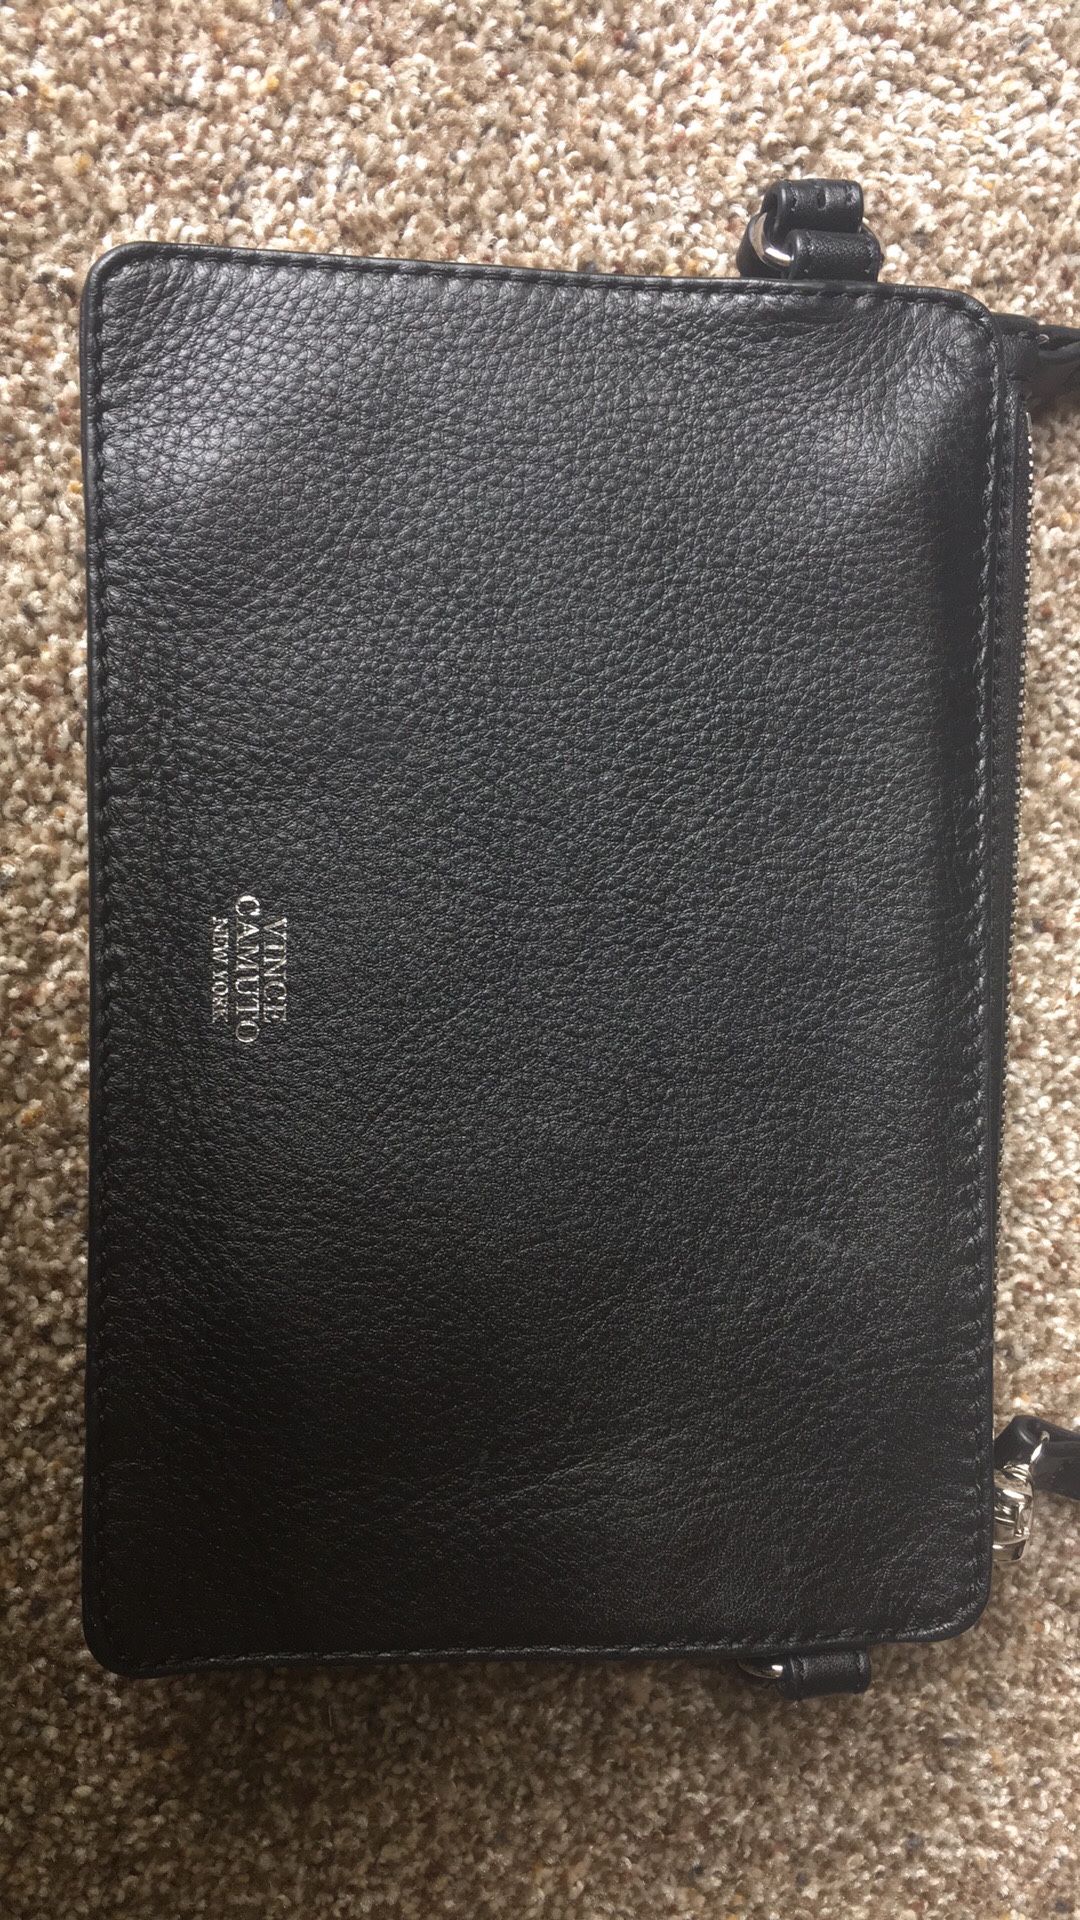 Vince camuto Nordstrom purse messenger bag black leather small